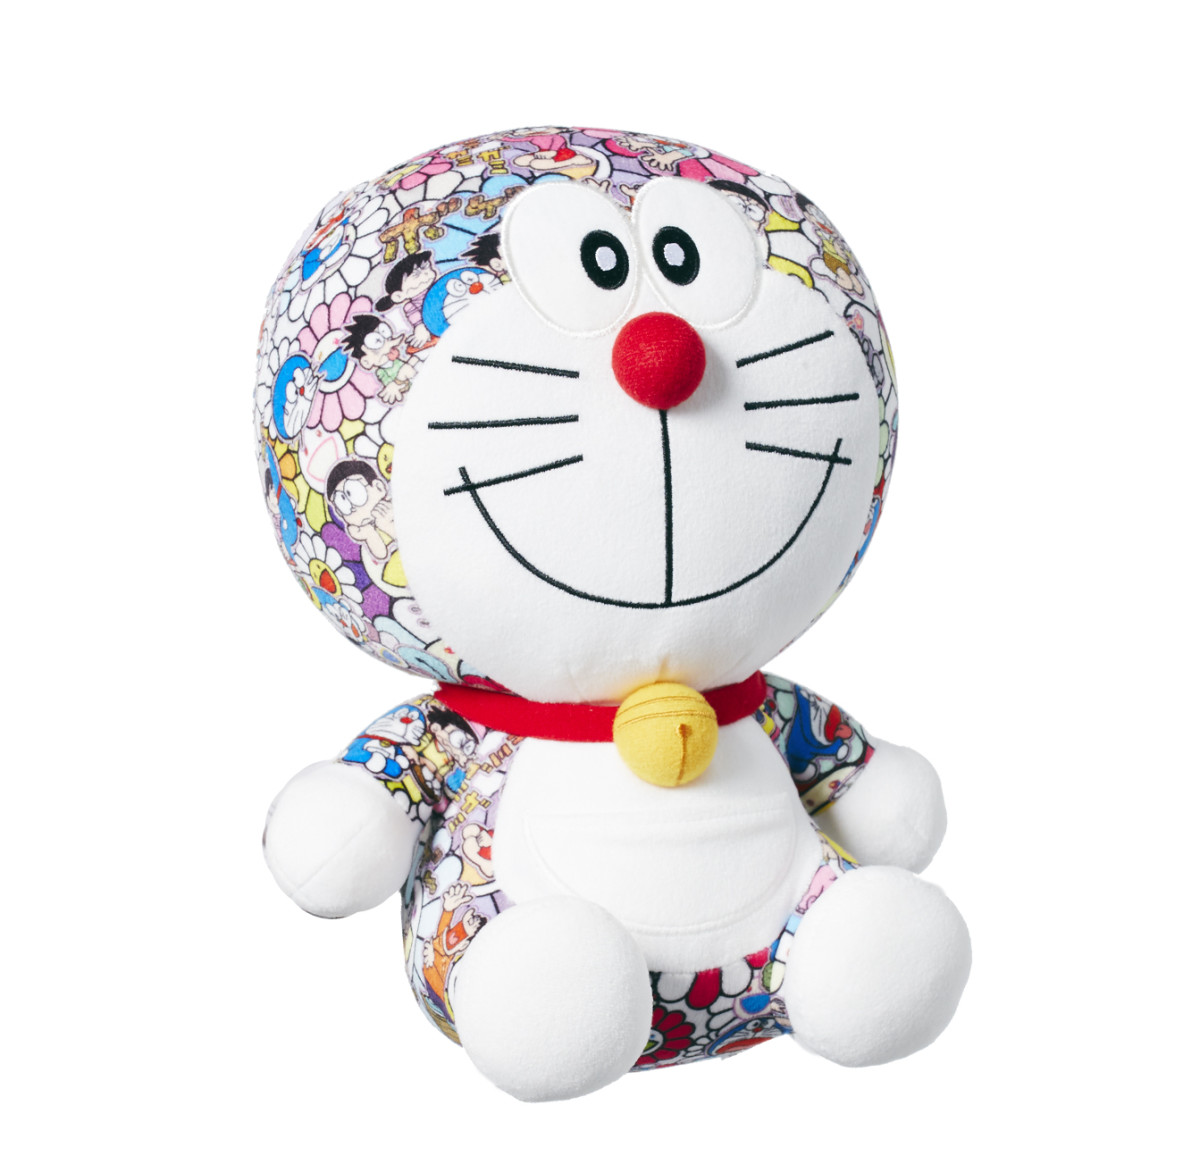 Uniqlo's "UT Doraemon" plush toy in collaboration with Takashi Murakami. Photo: Uniqlo